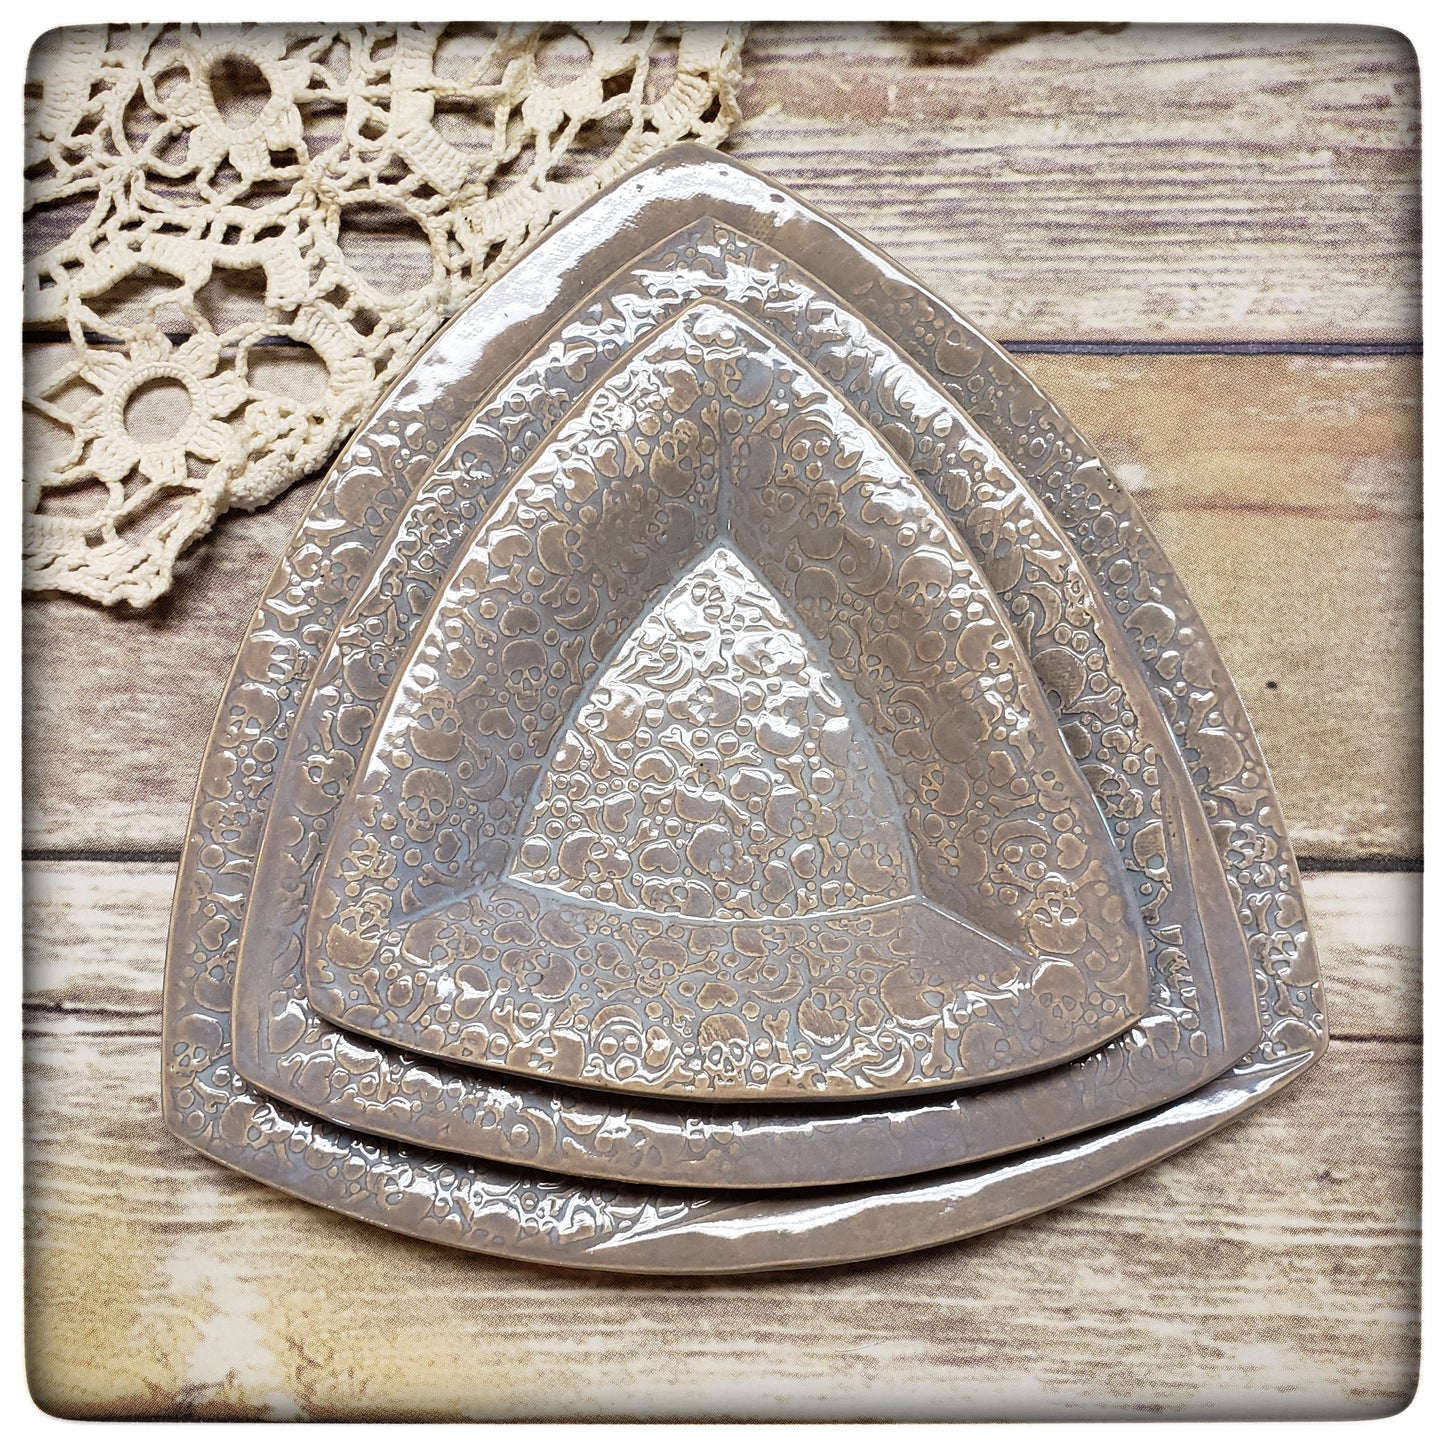 Skull triangle dish (5.5 inch)